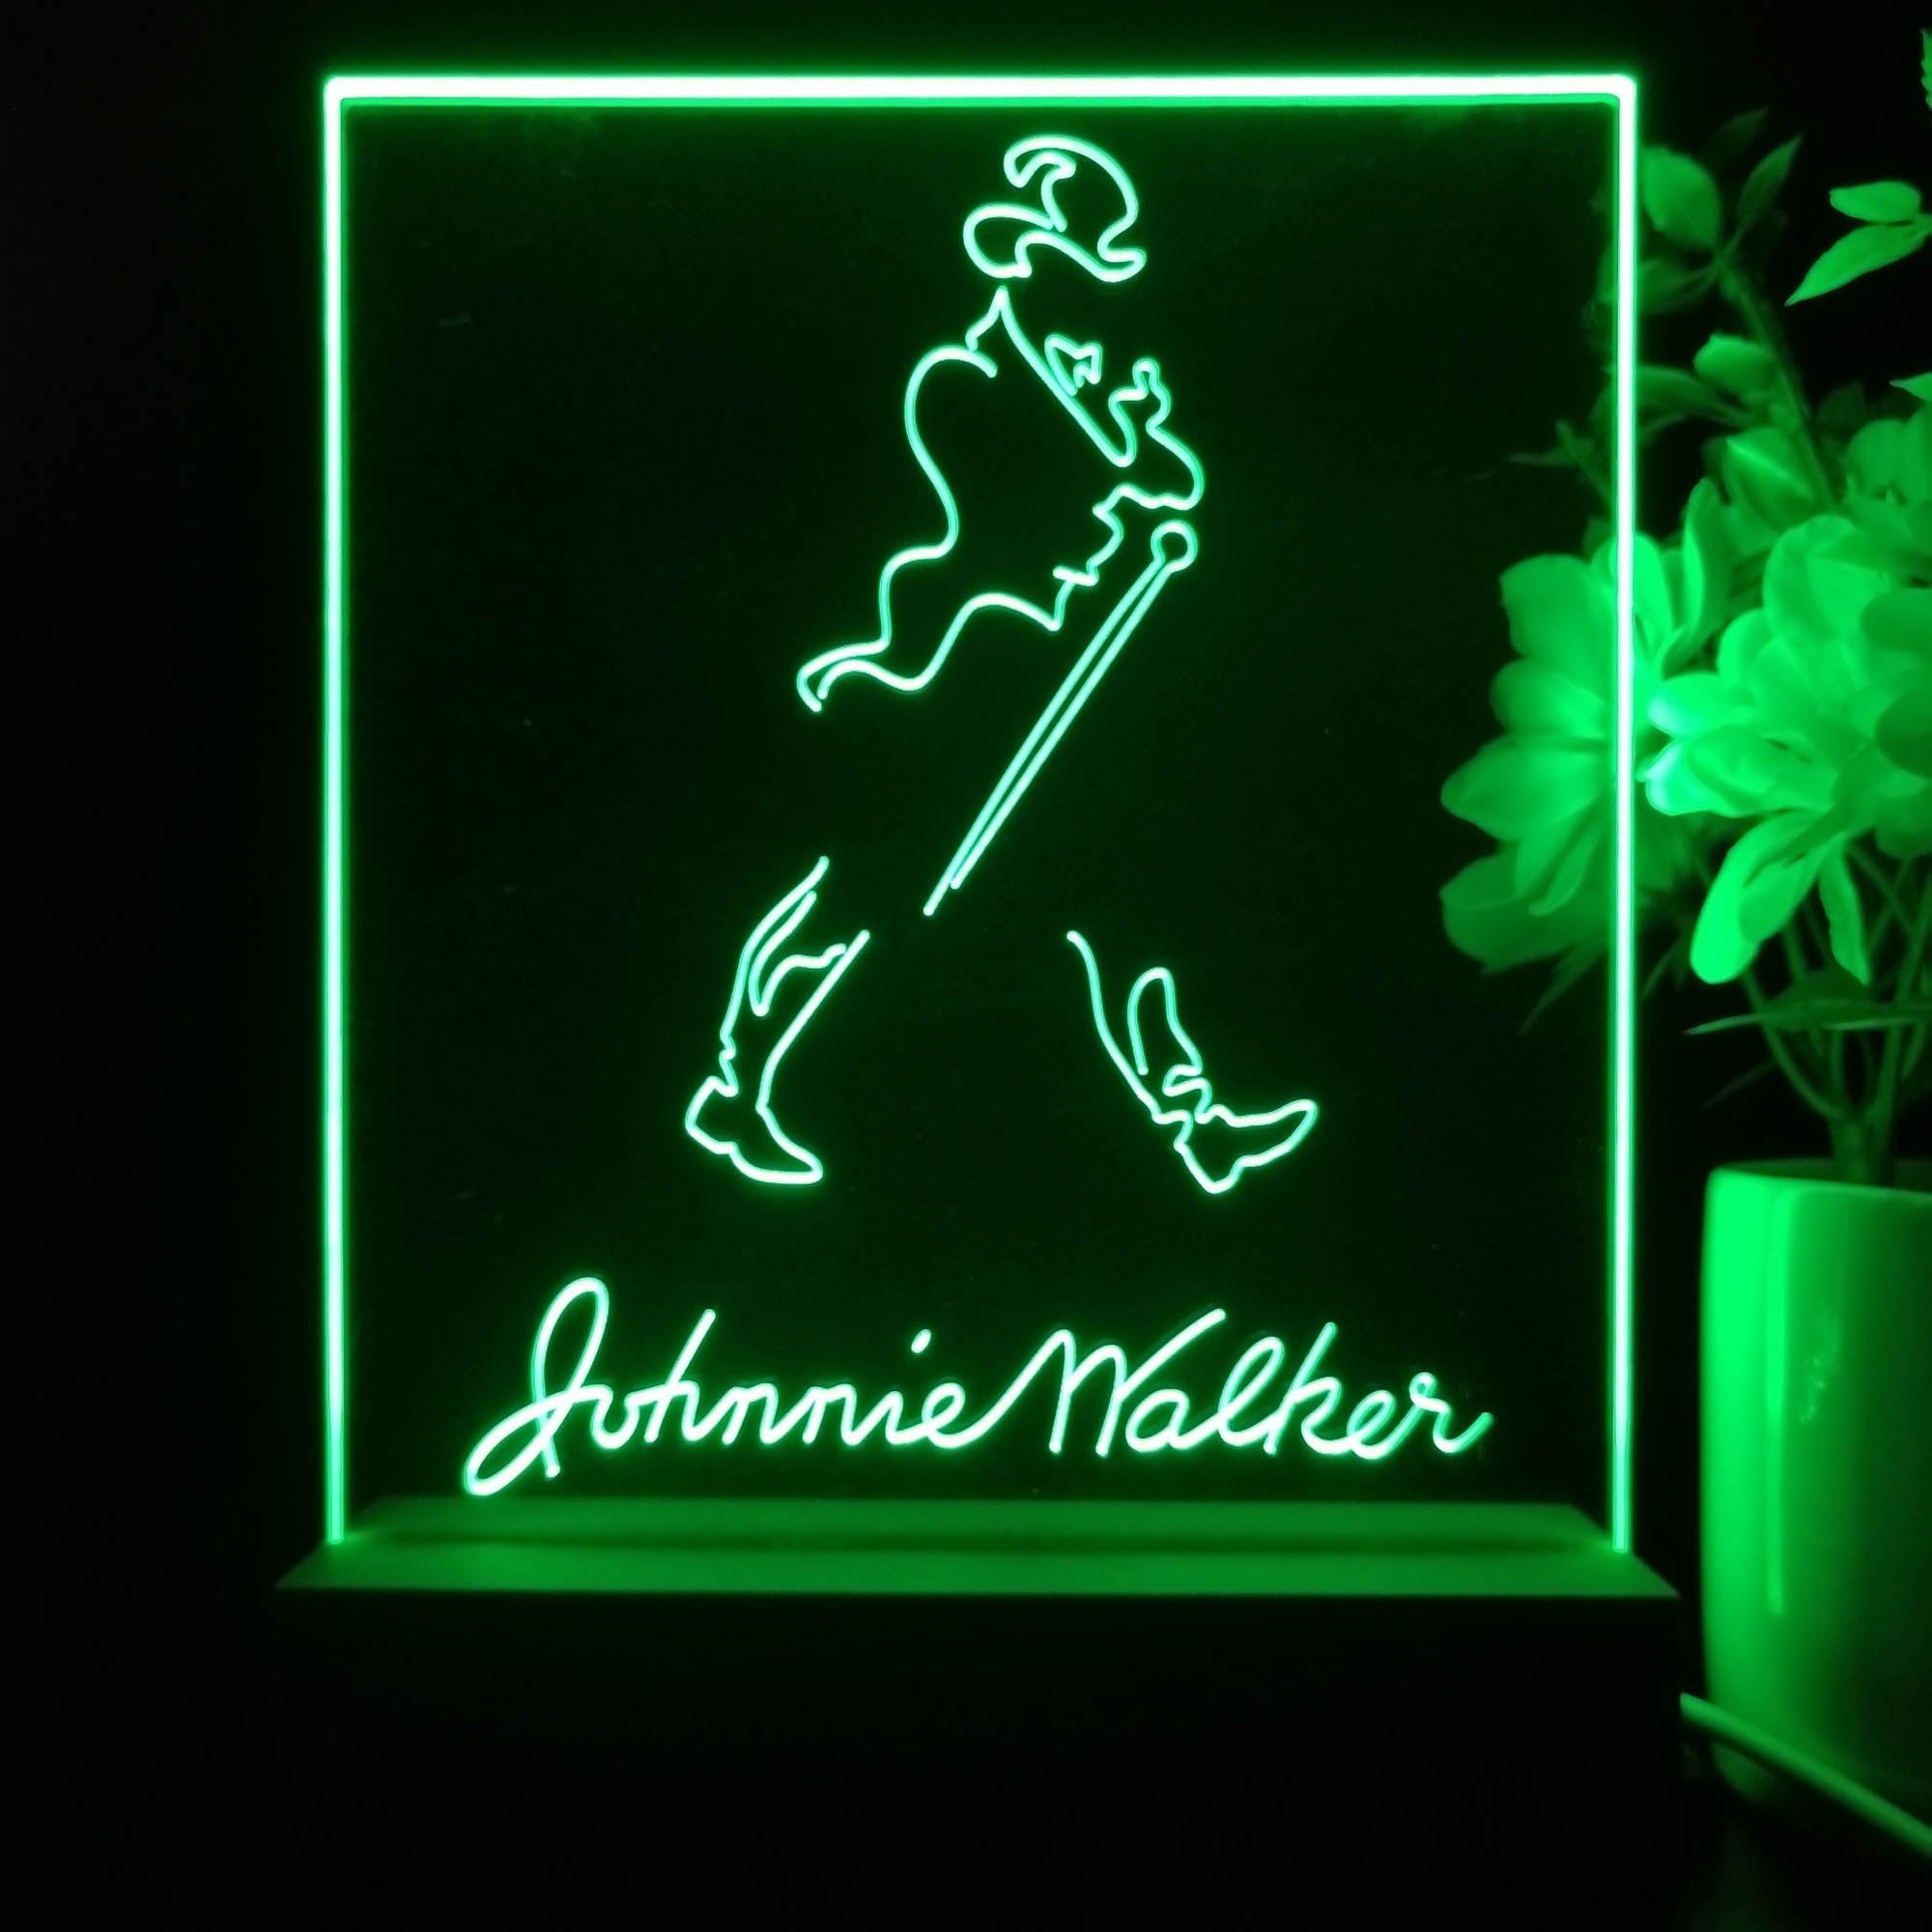 Johnnie Walker Right Night Light Neon Pub Bar Lamp